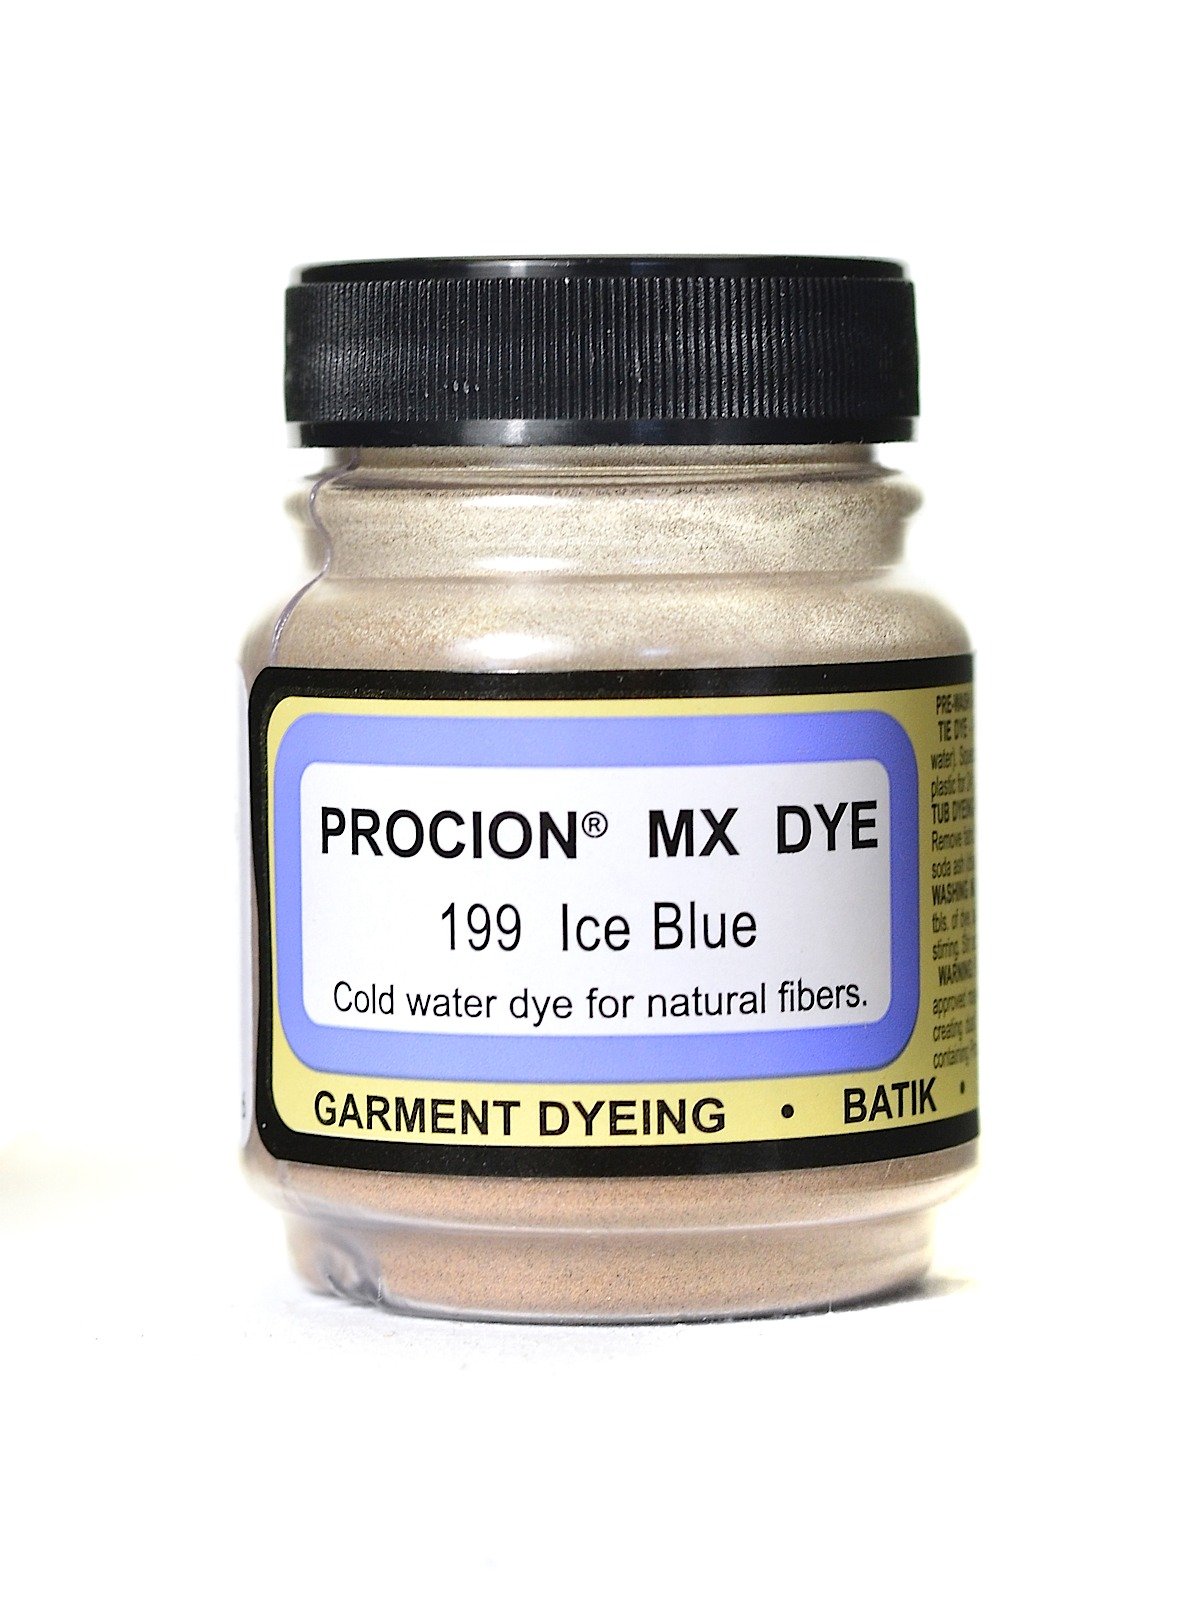 Jacquard Procion MX Fibra Reativa Corante (Azul Cobalto) - CC# 076